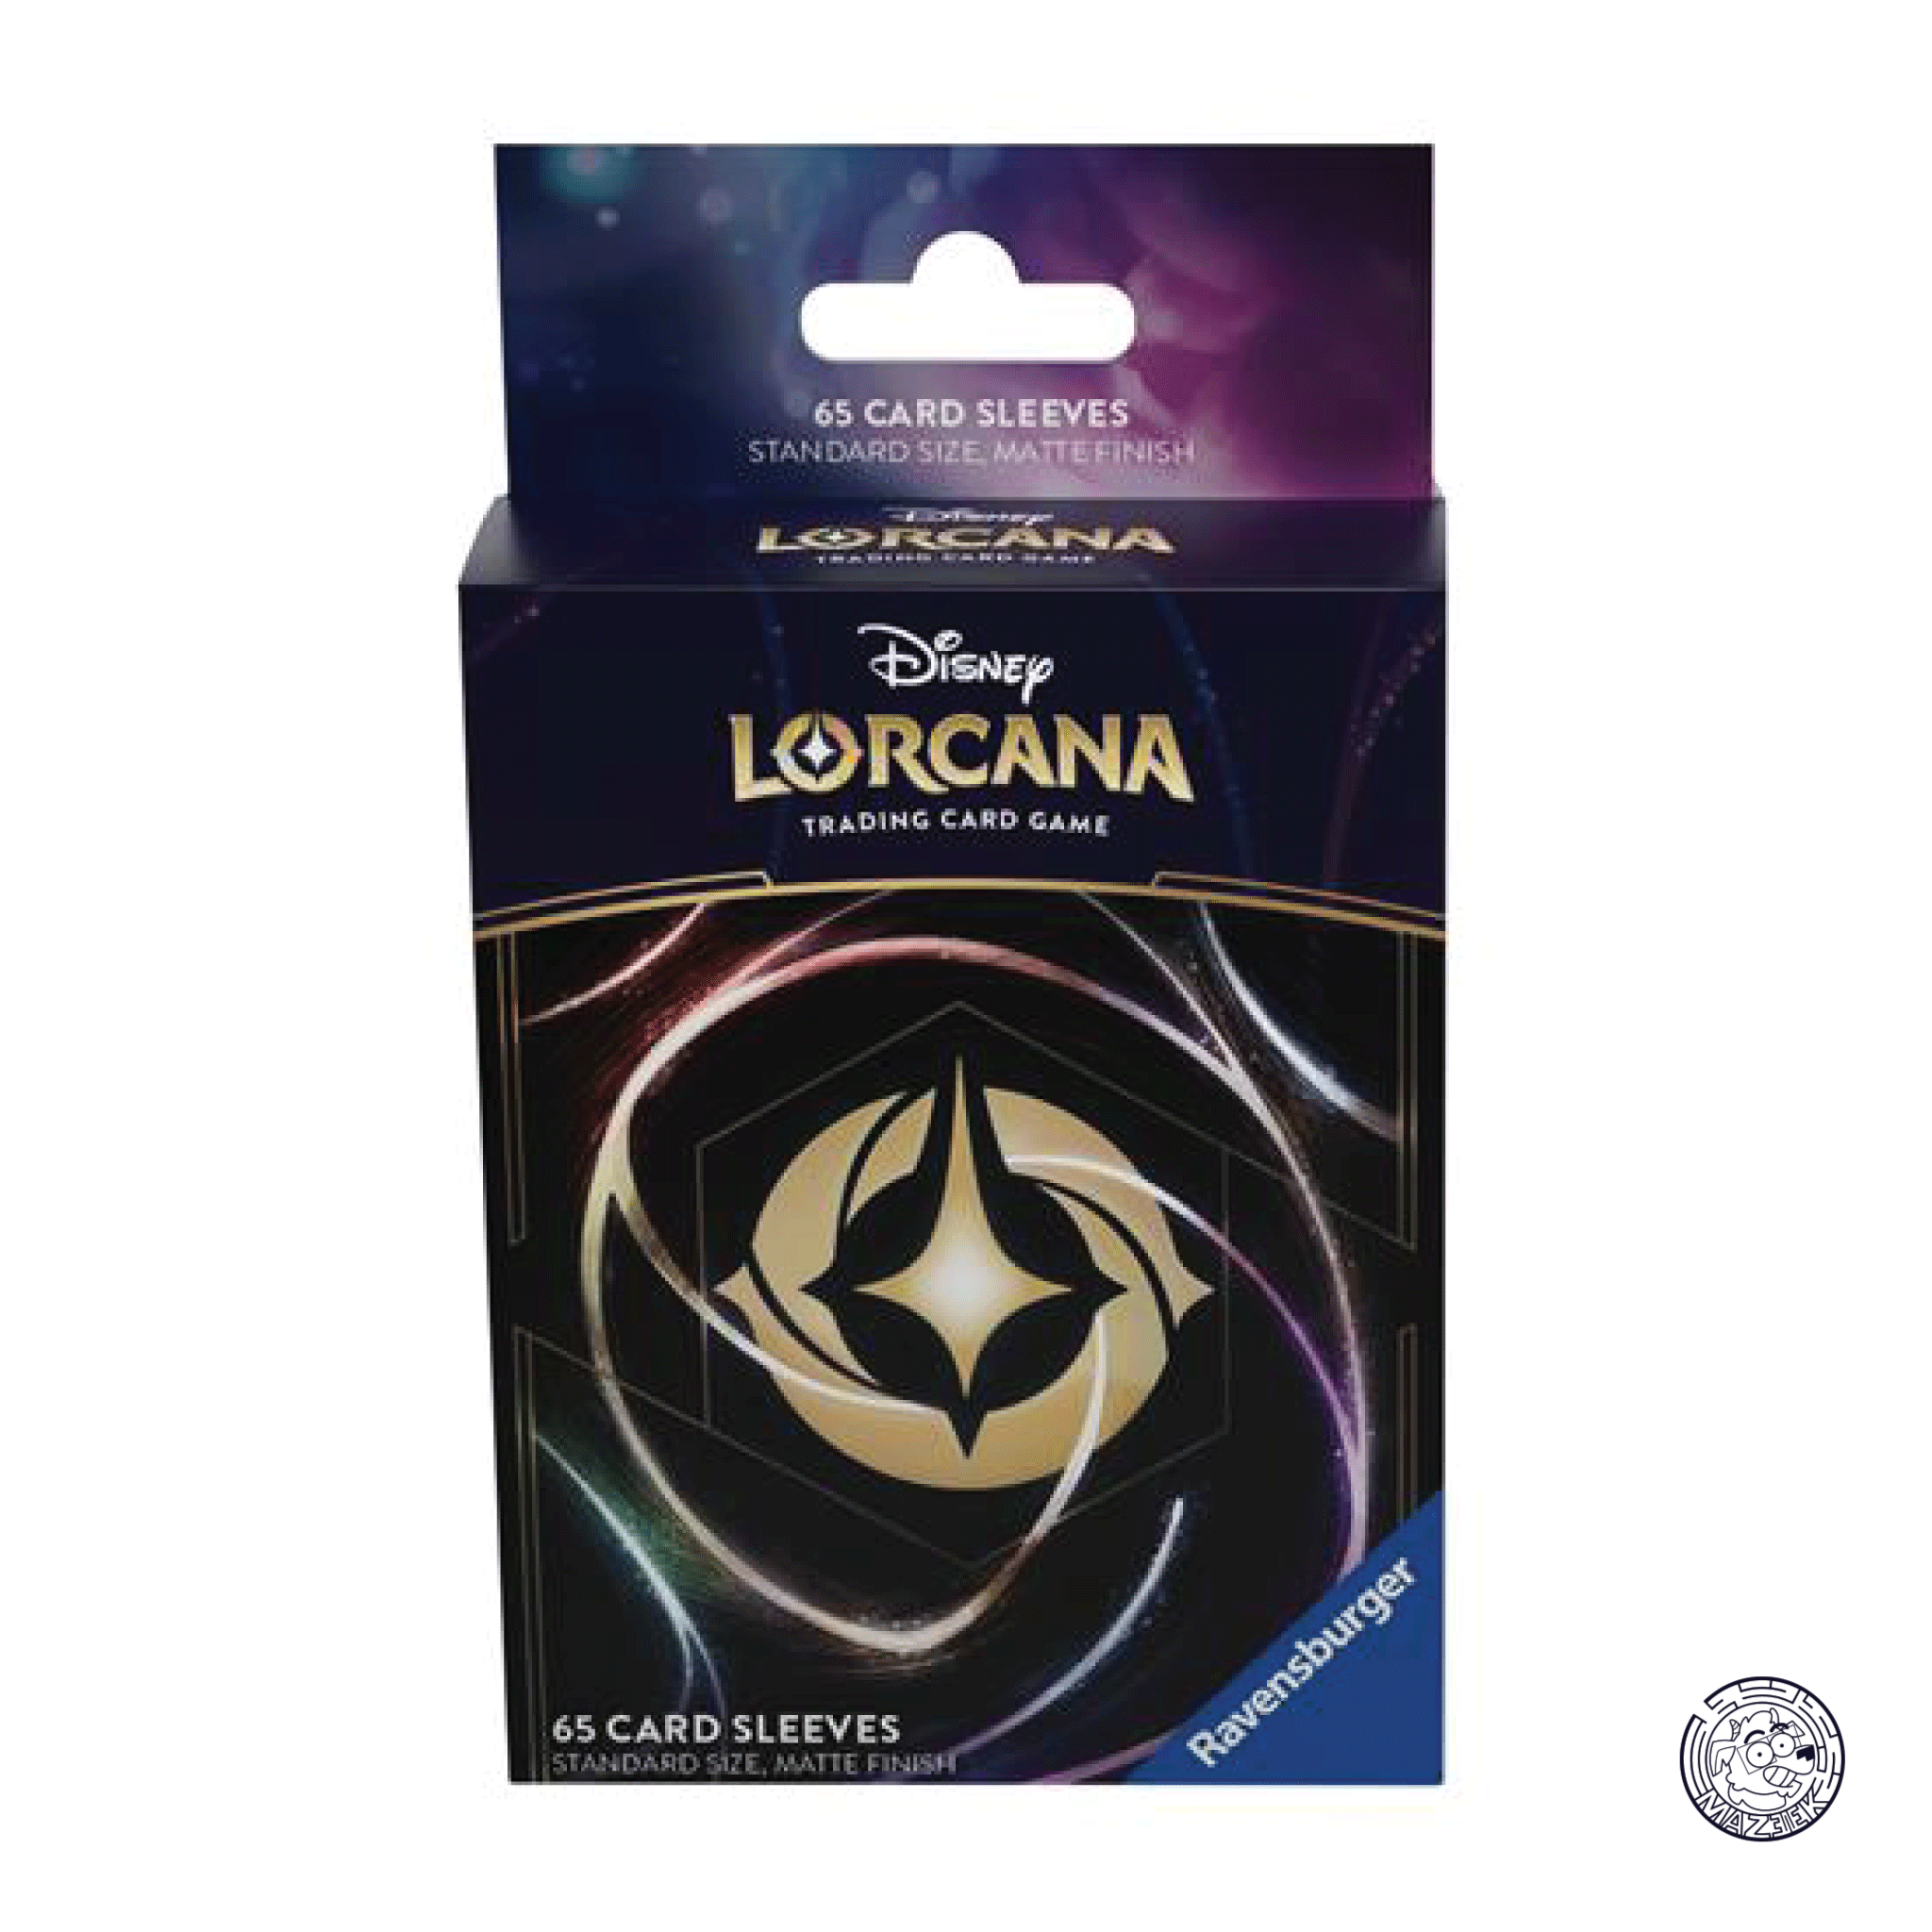 Lorcana! Card Sleeves (65 Sleeves) - Logo Lorcana